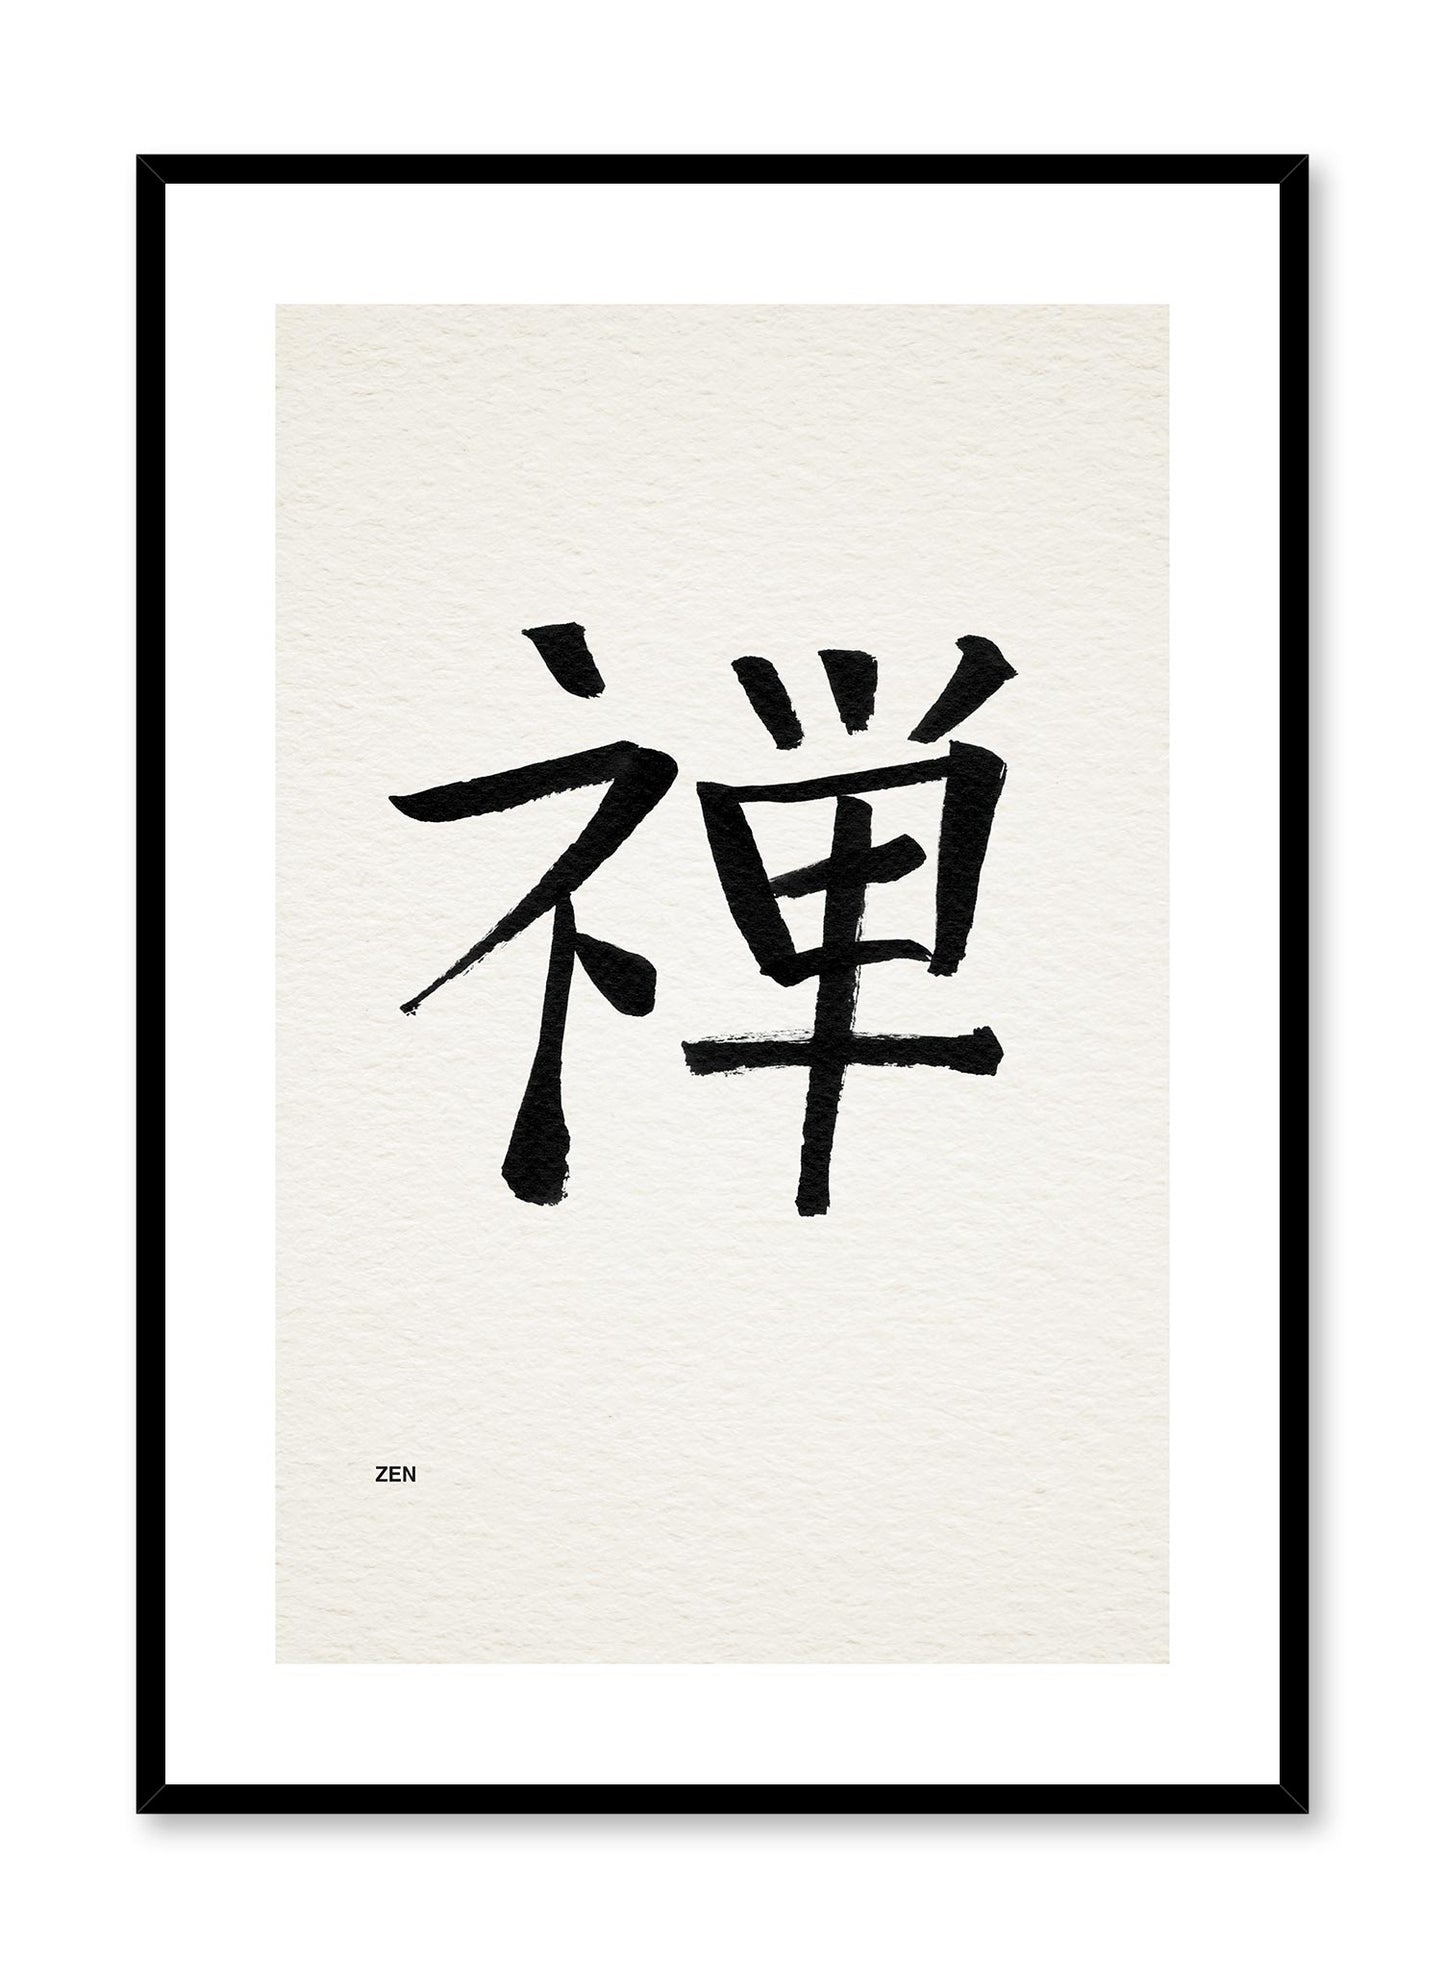 Zen Symbol is a minimalist typography by Opposite Wall of the Japanese word "Zen" written in ink. 